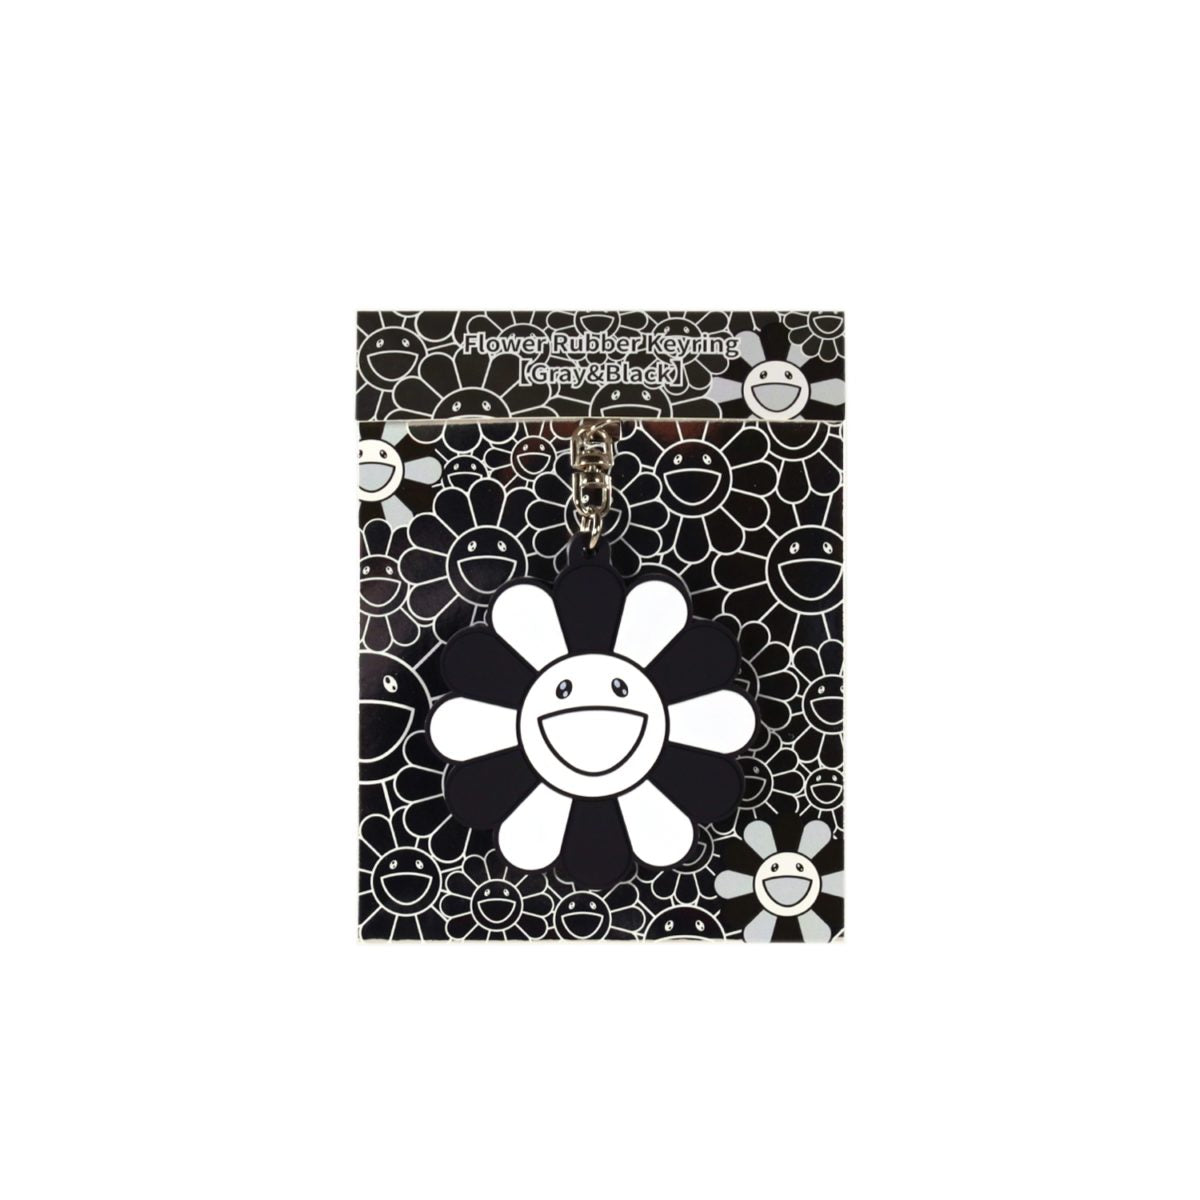 Takashi Murakami Flower Rubber Keyring Black/ Grey - US